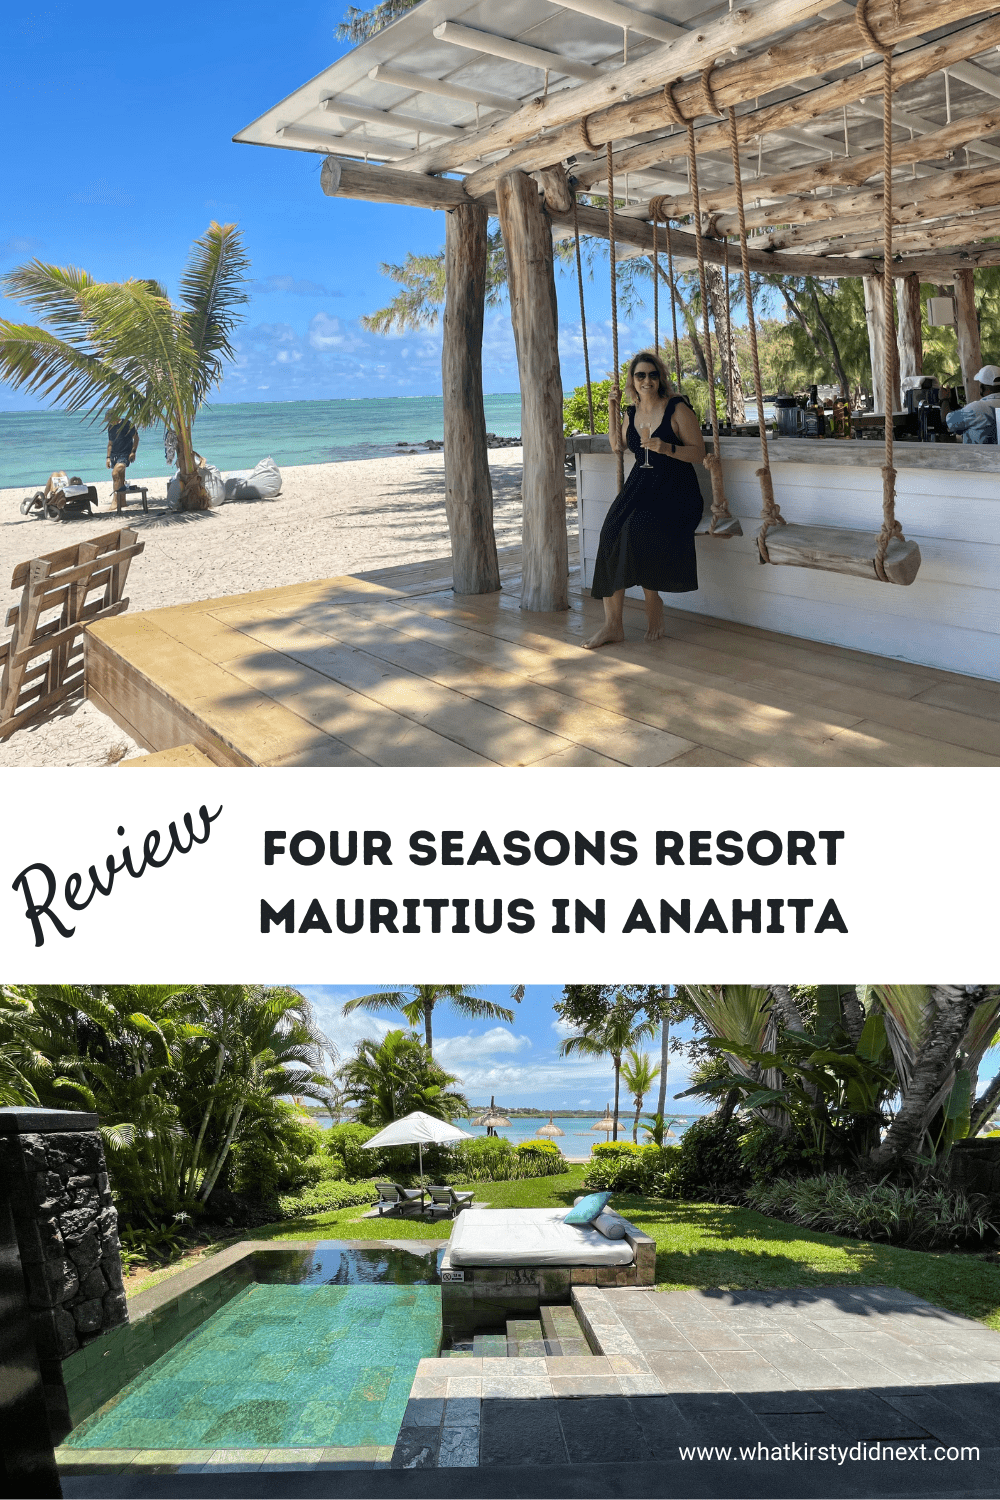 Review of Four Seasons Resort Mauritius in Anahita